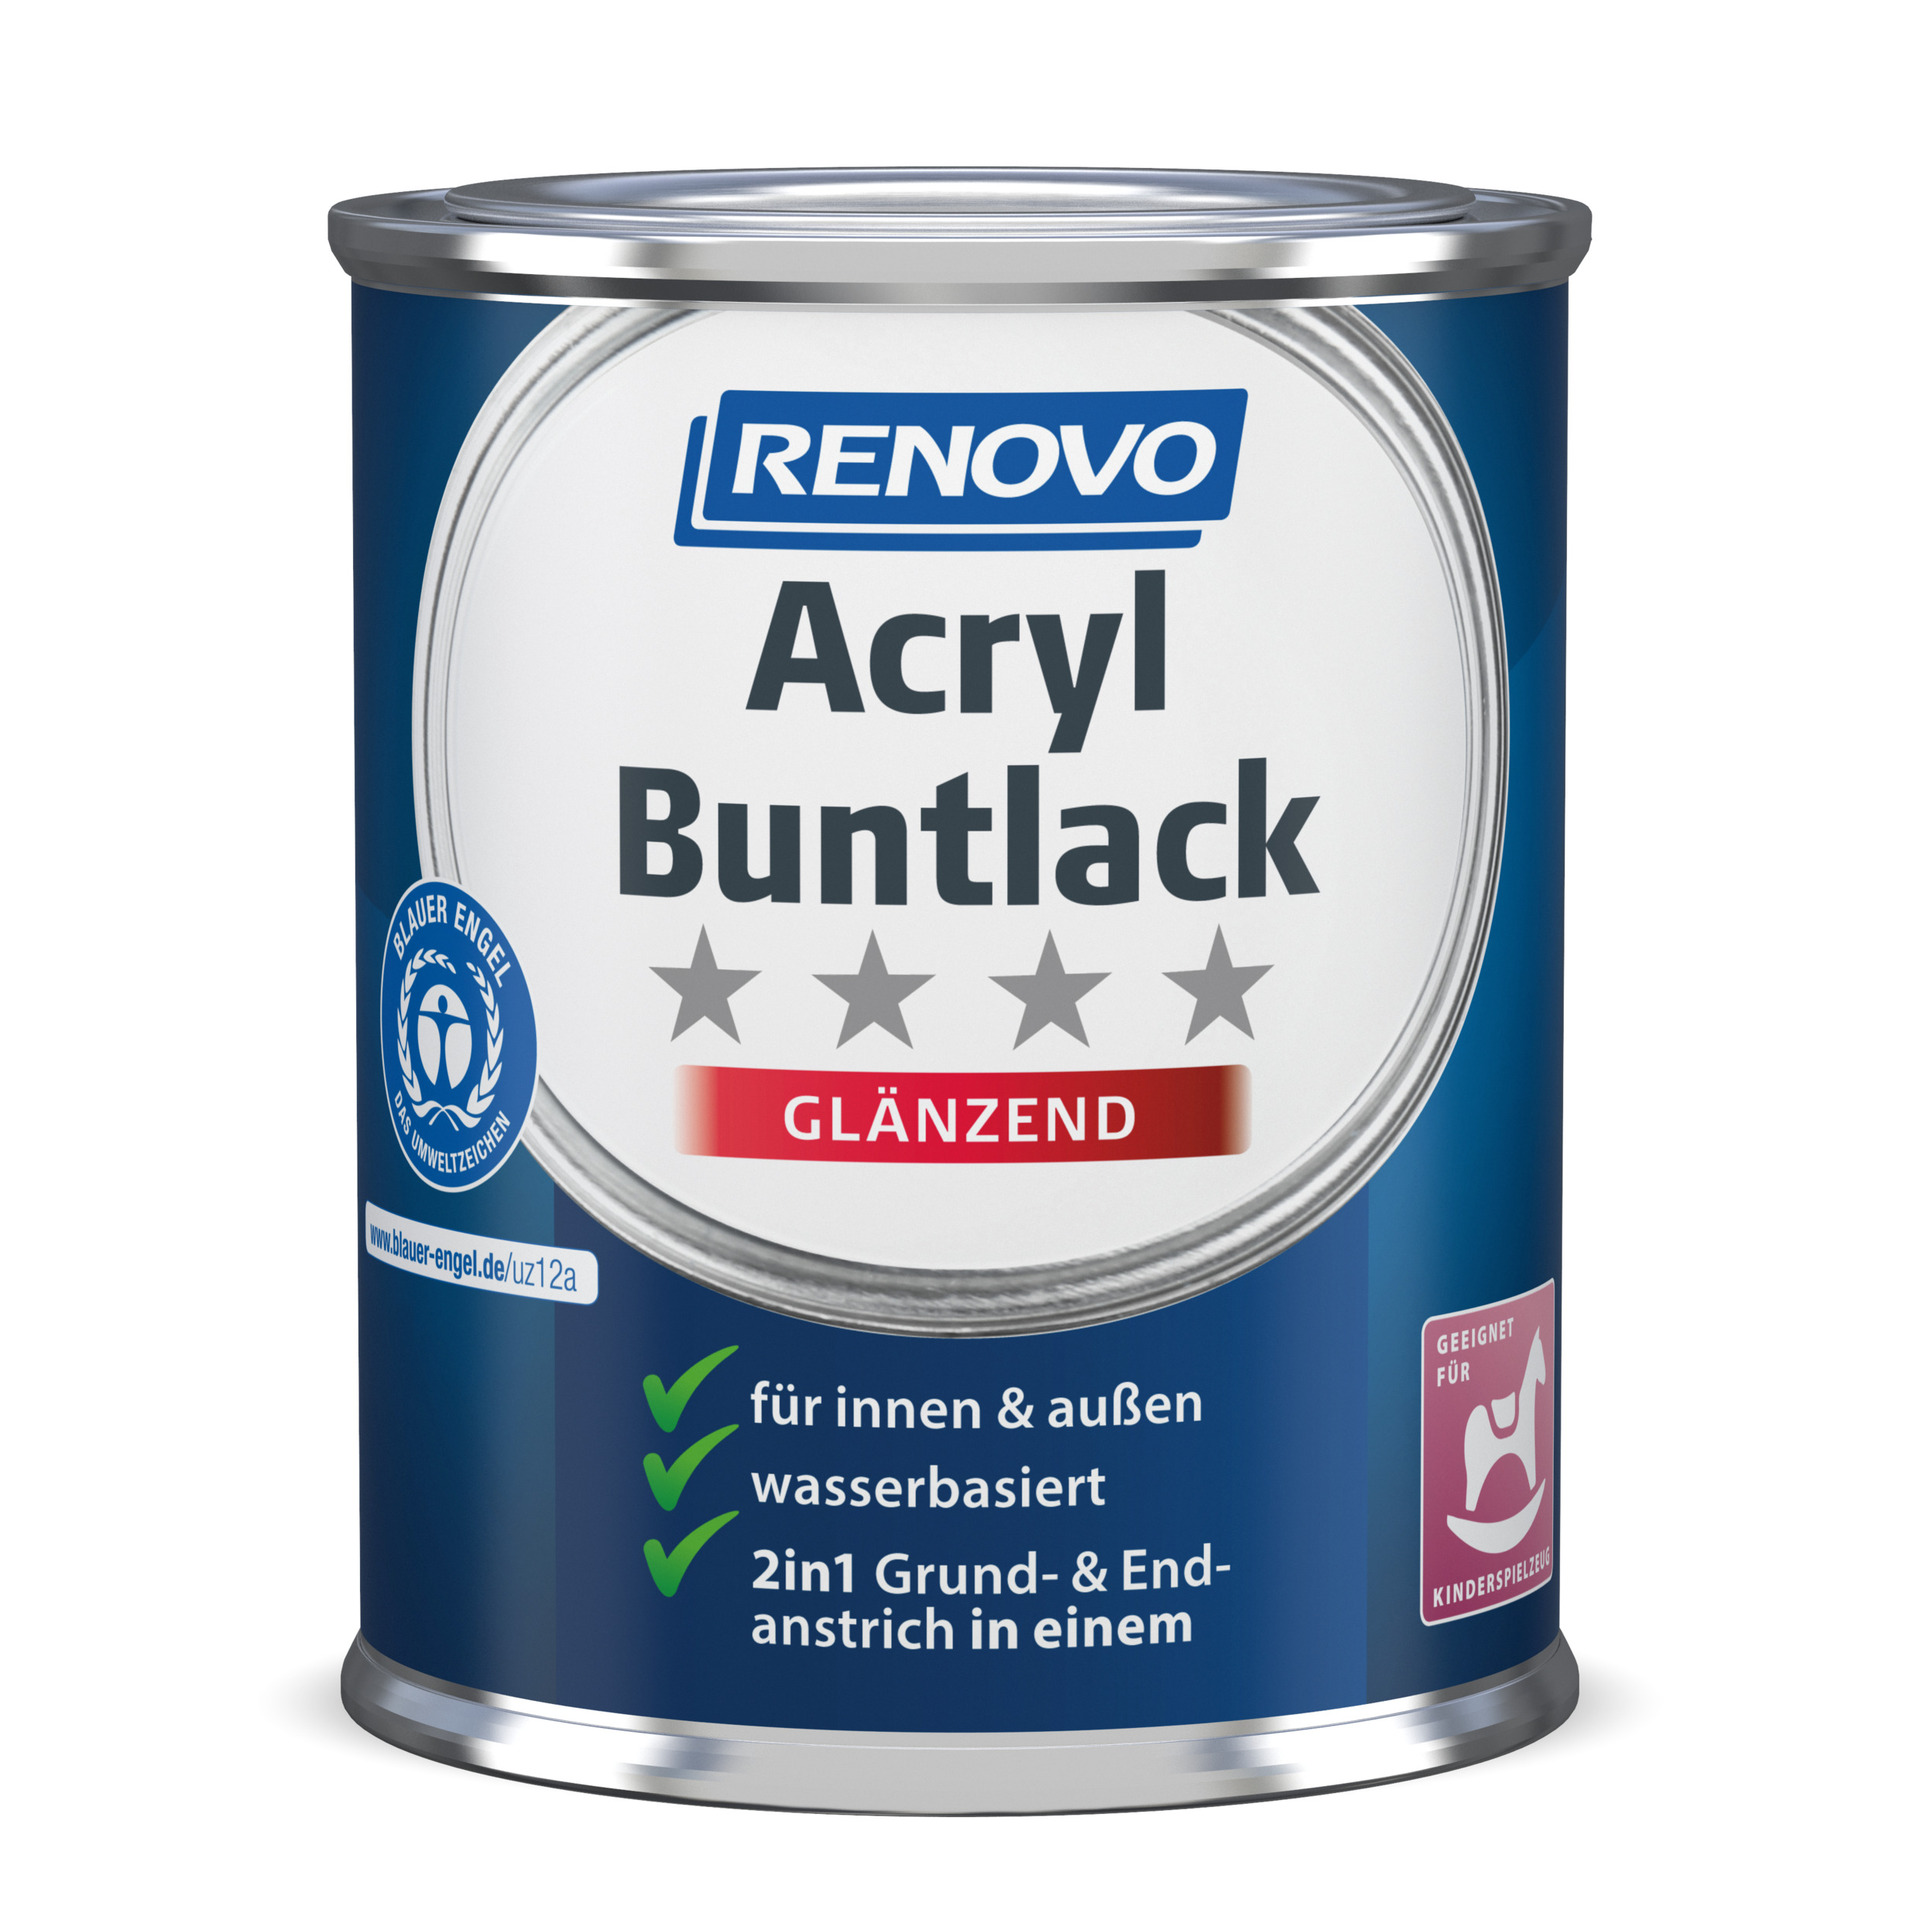 Renovo Acryl Buntlack